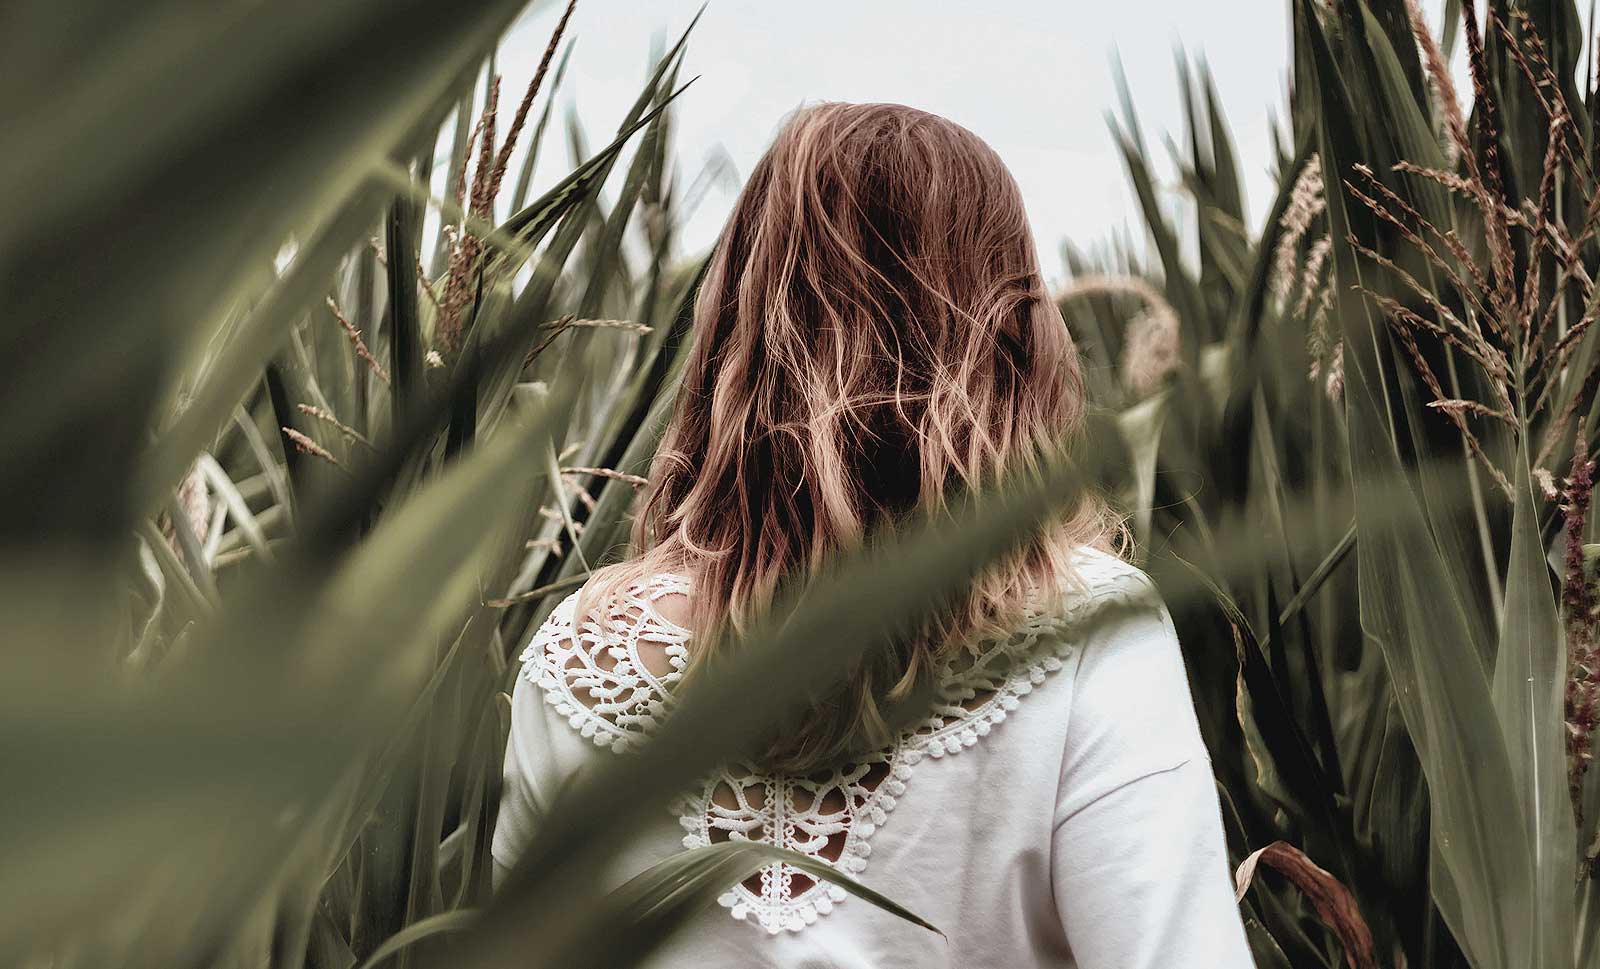 A woman walking through stalks of corn